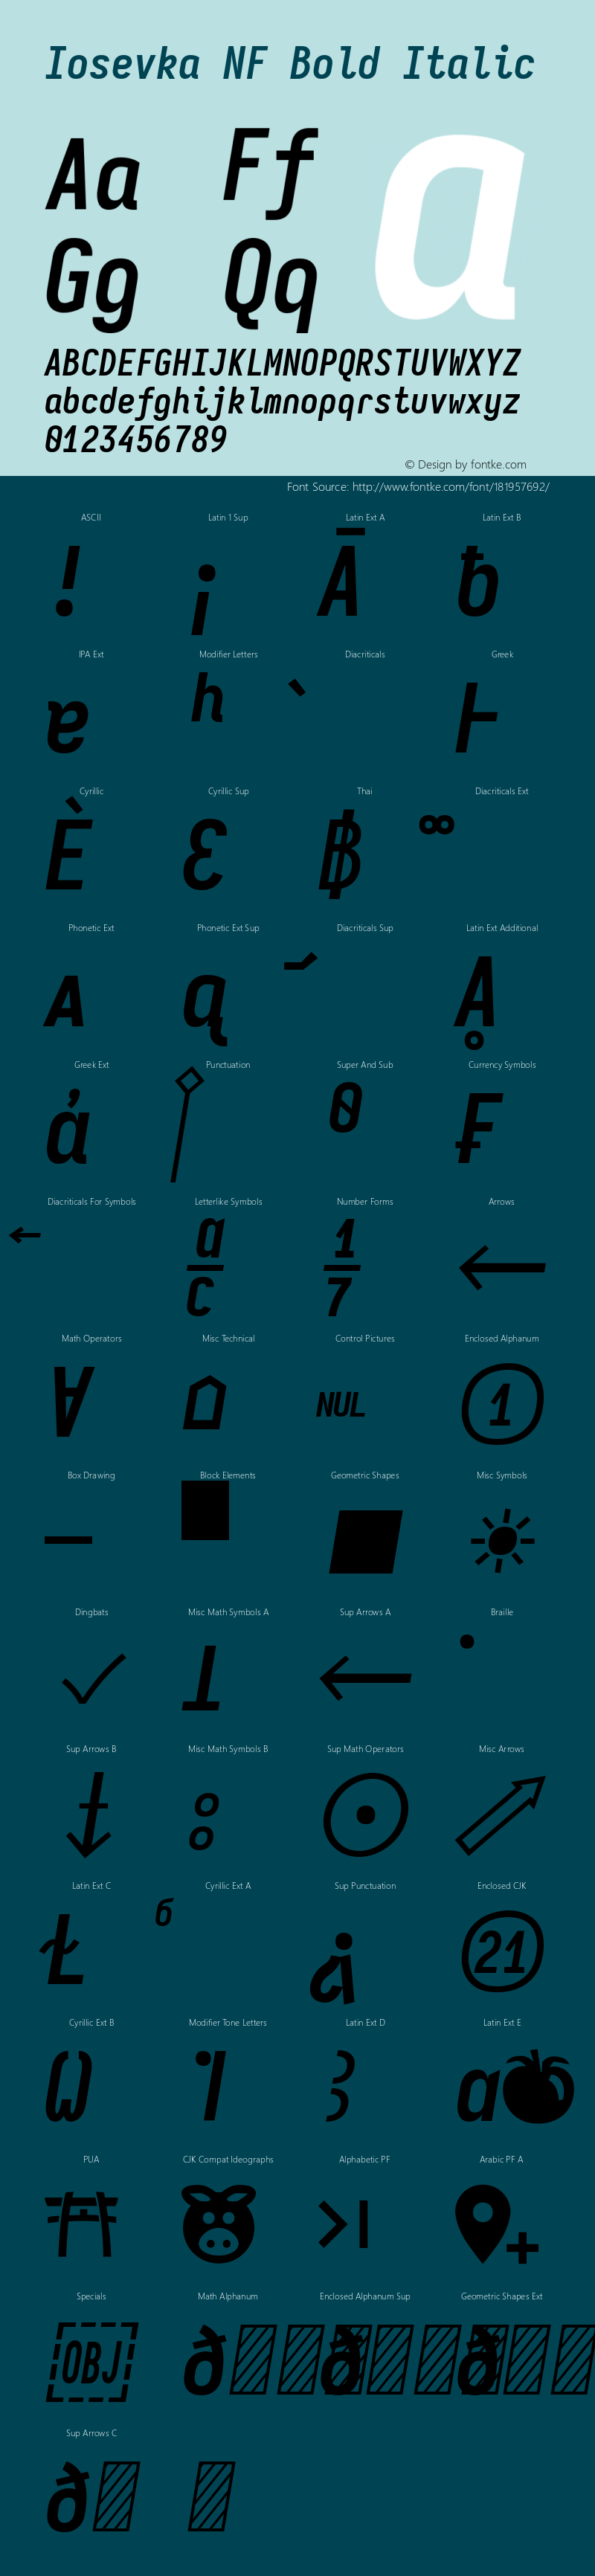 Iosevka Mayukai Monolite Bold Italic Nerd Font Complete Windows Compatible Version 10.3.4; ttfautohint (v1.8.4)图片样张